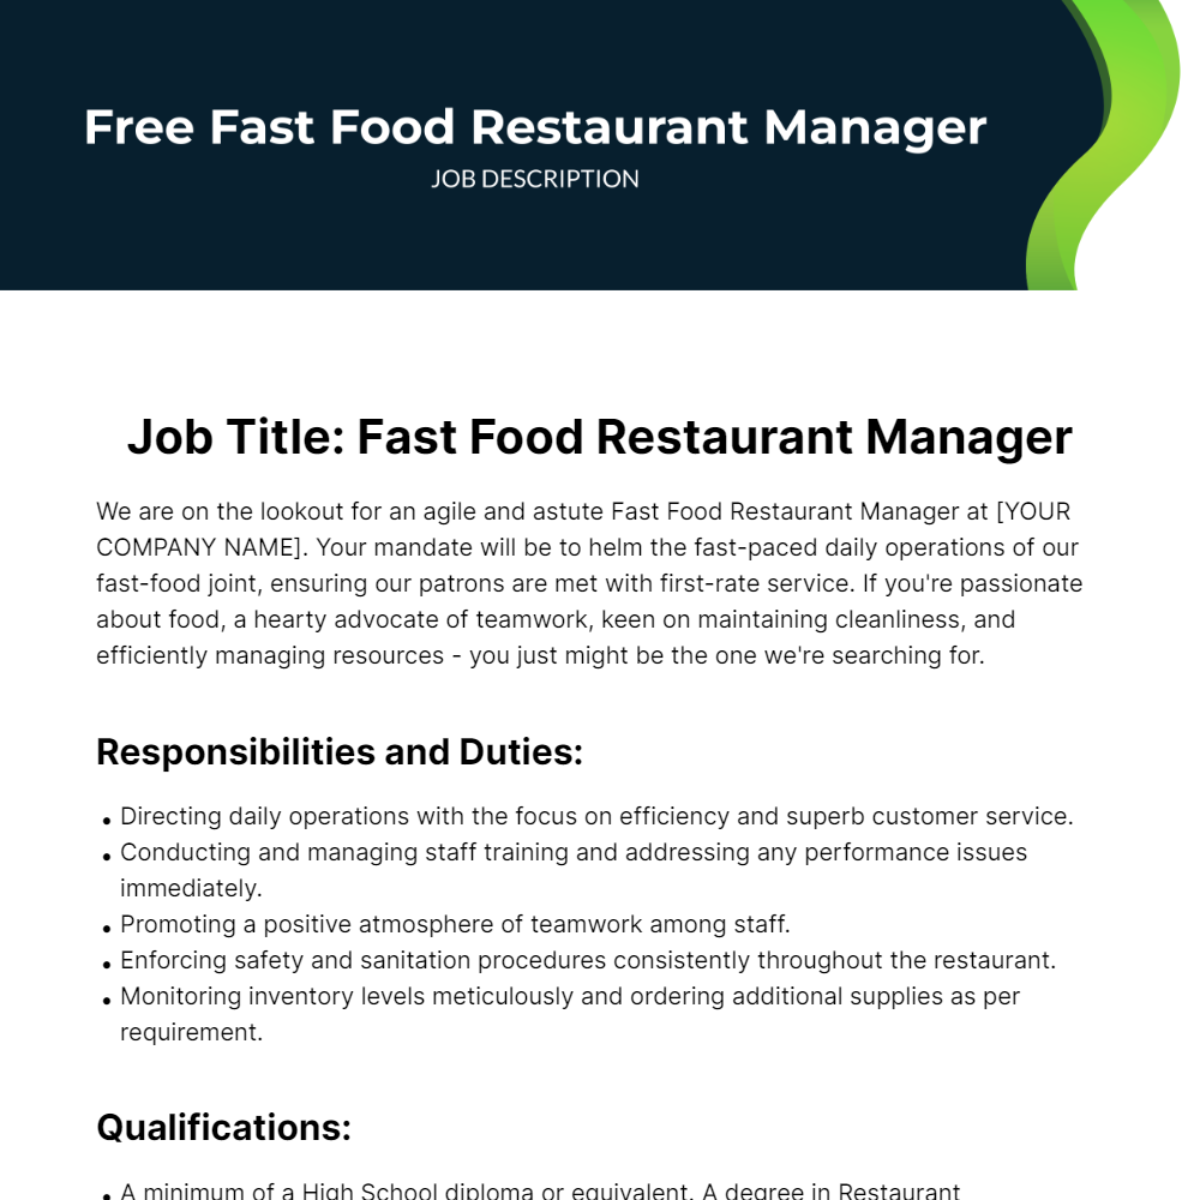 Fast Food Restaurant Manager Job Description Template